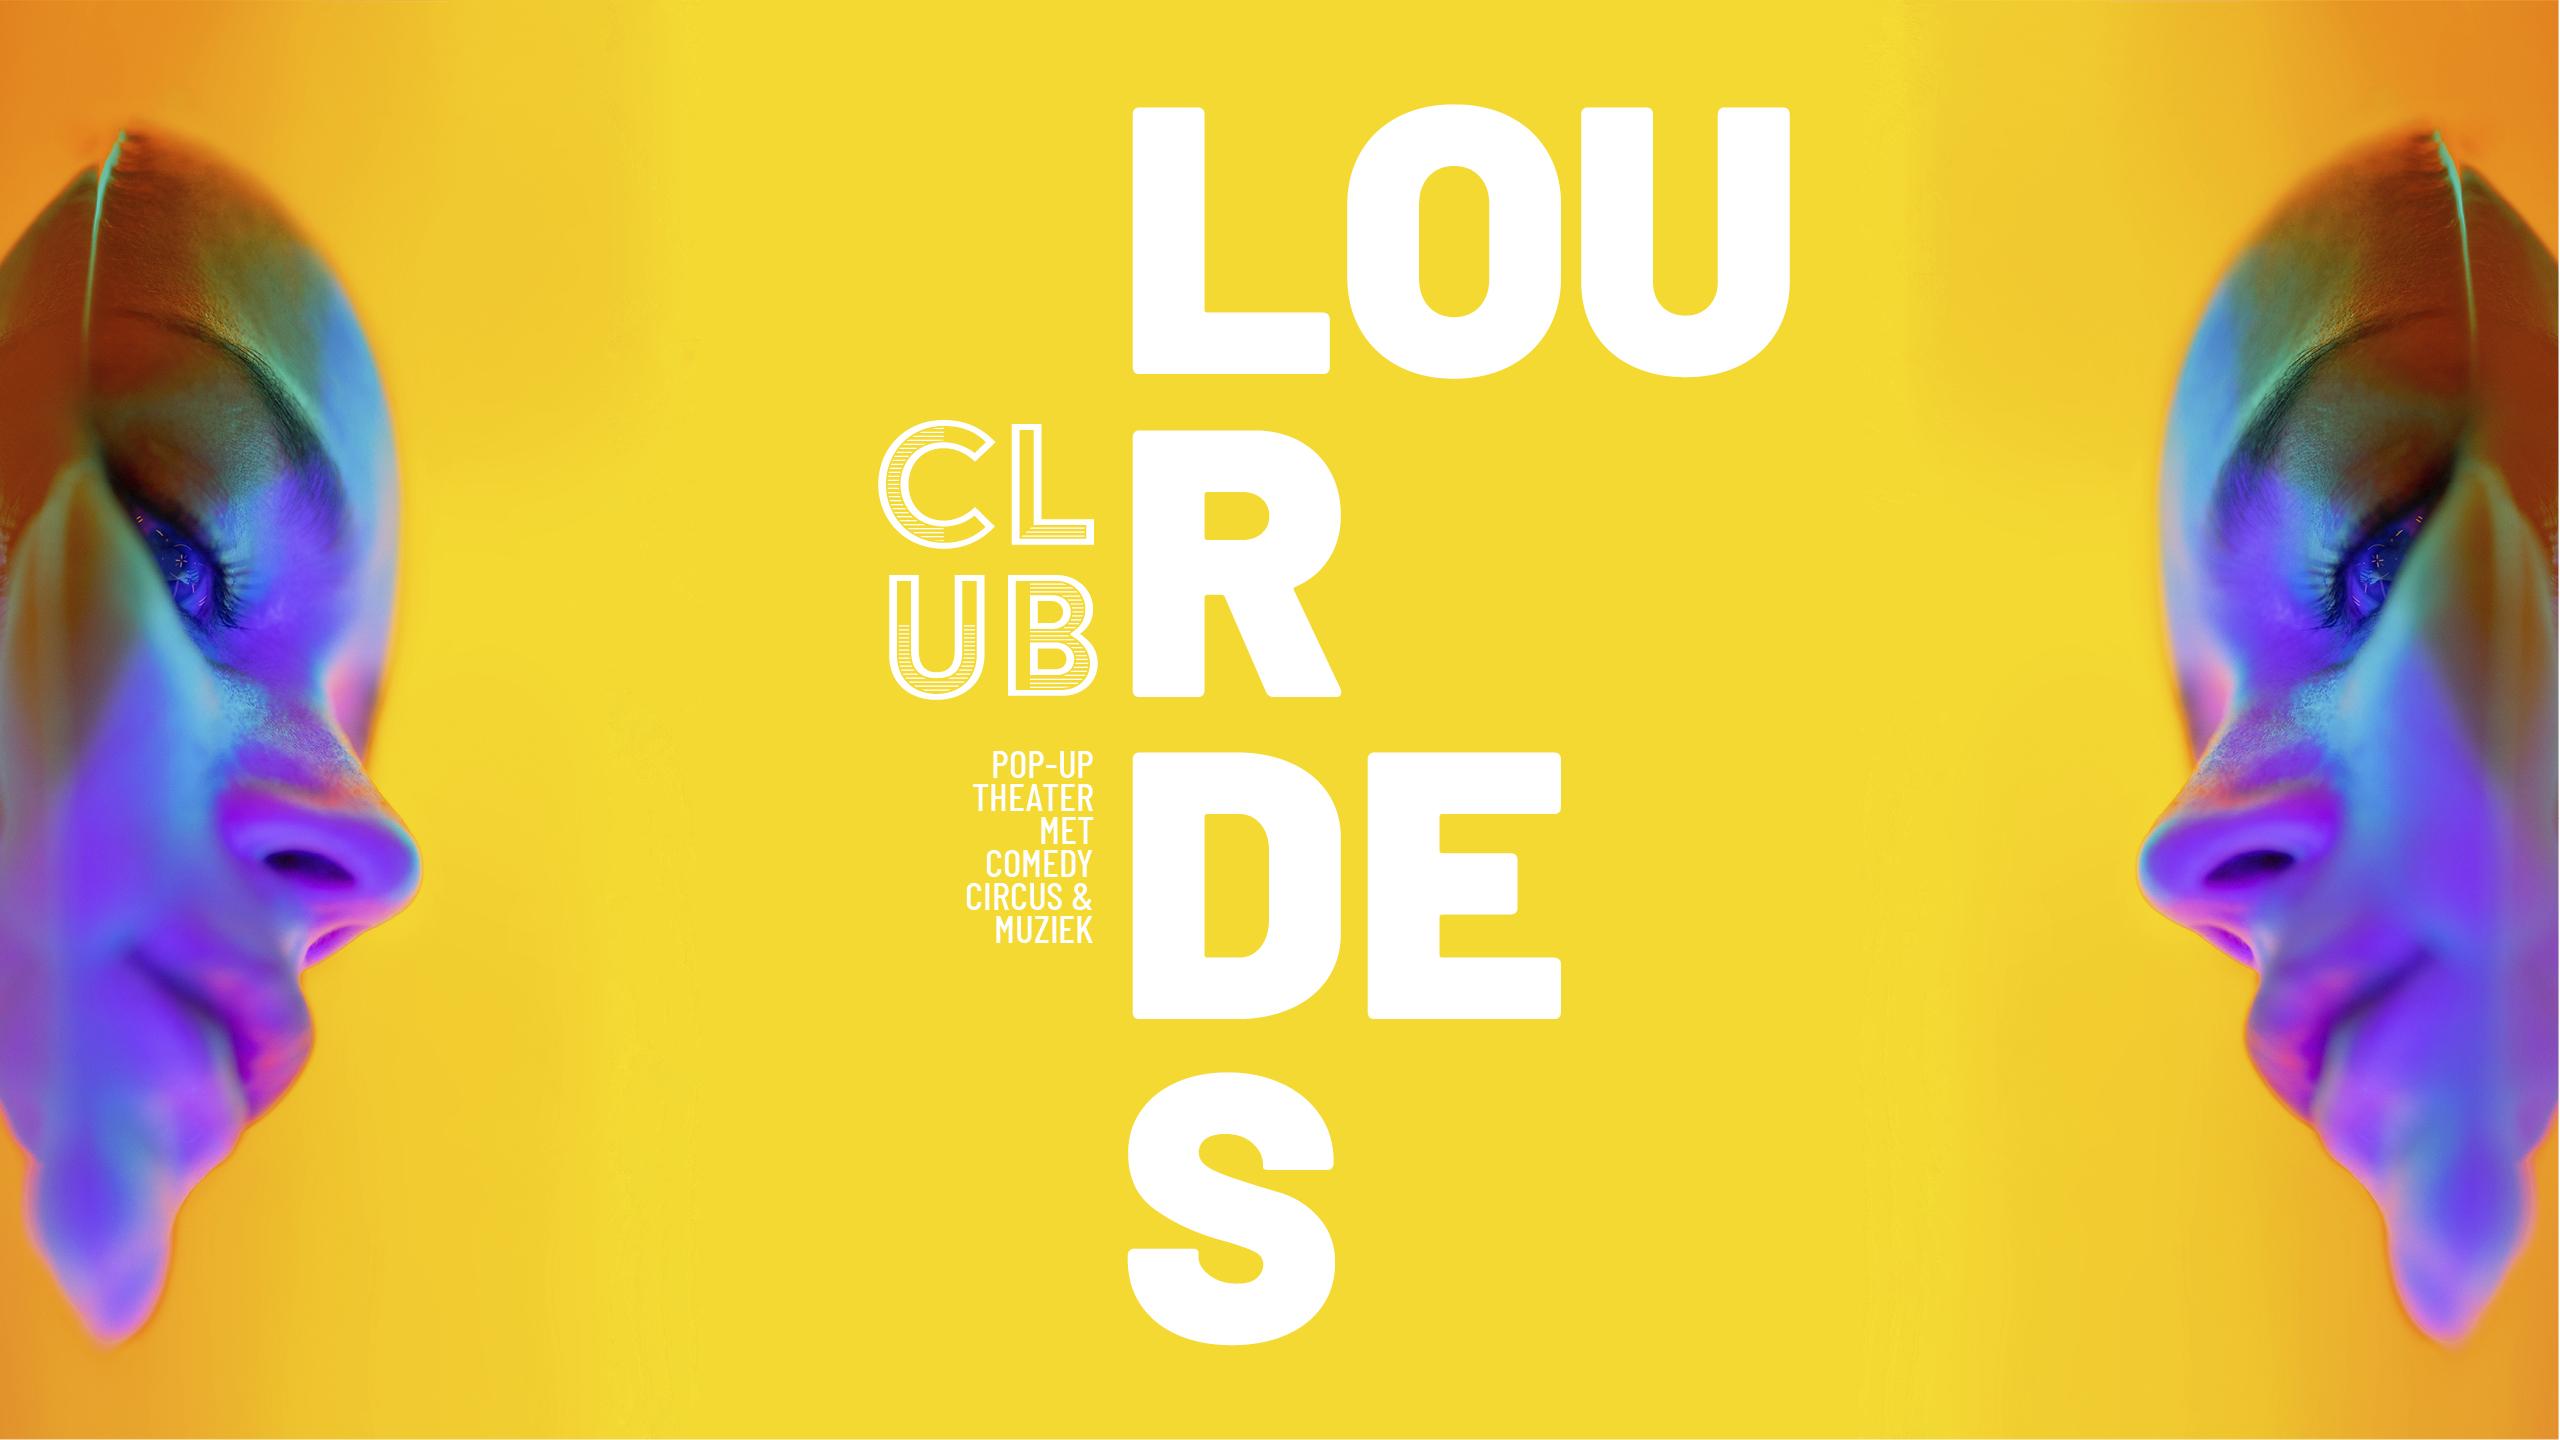 Club Lourdes Brand Identity